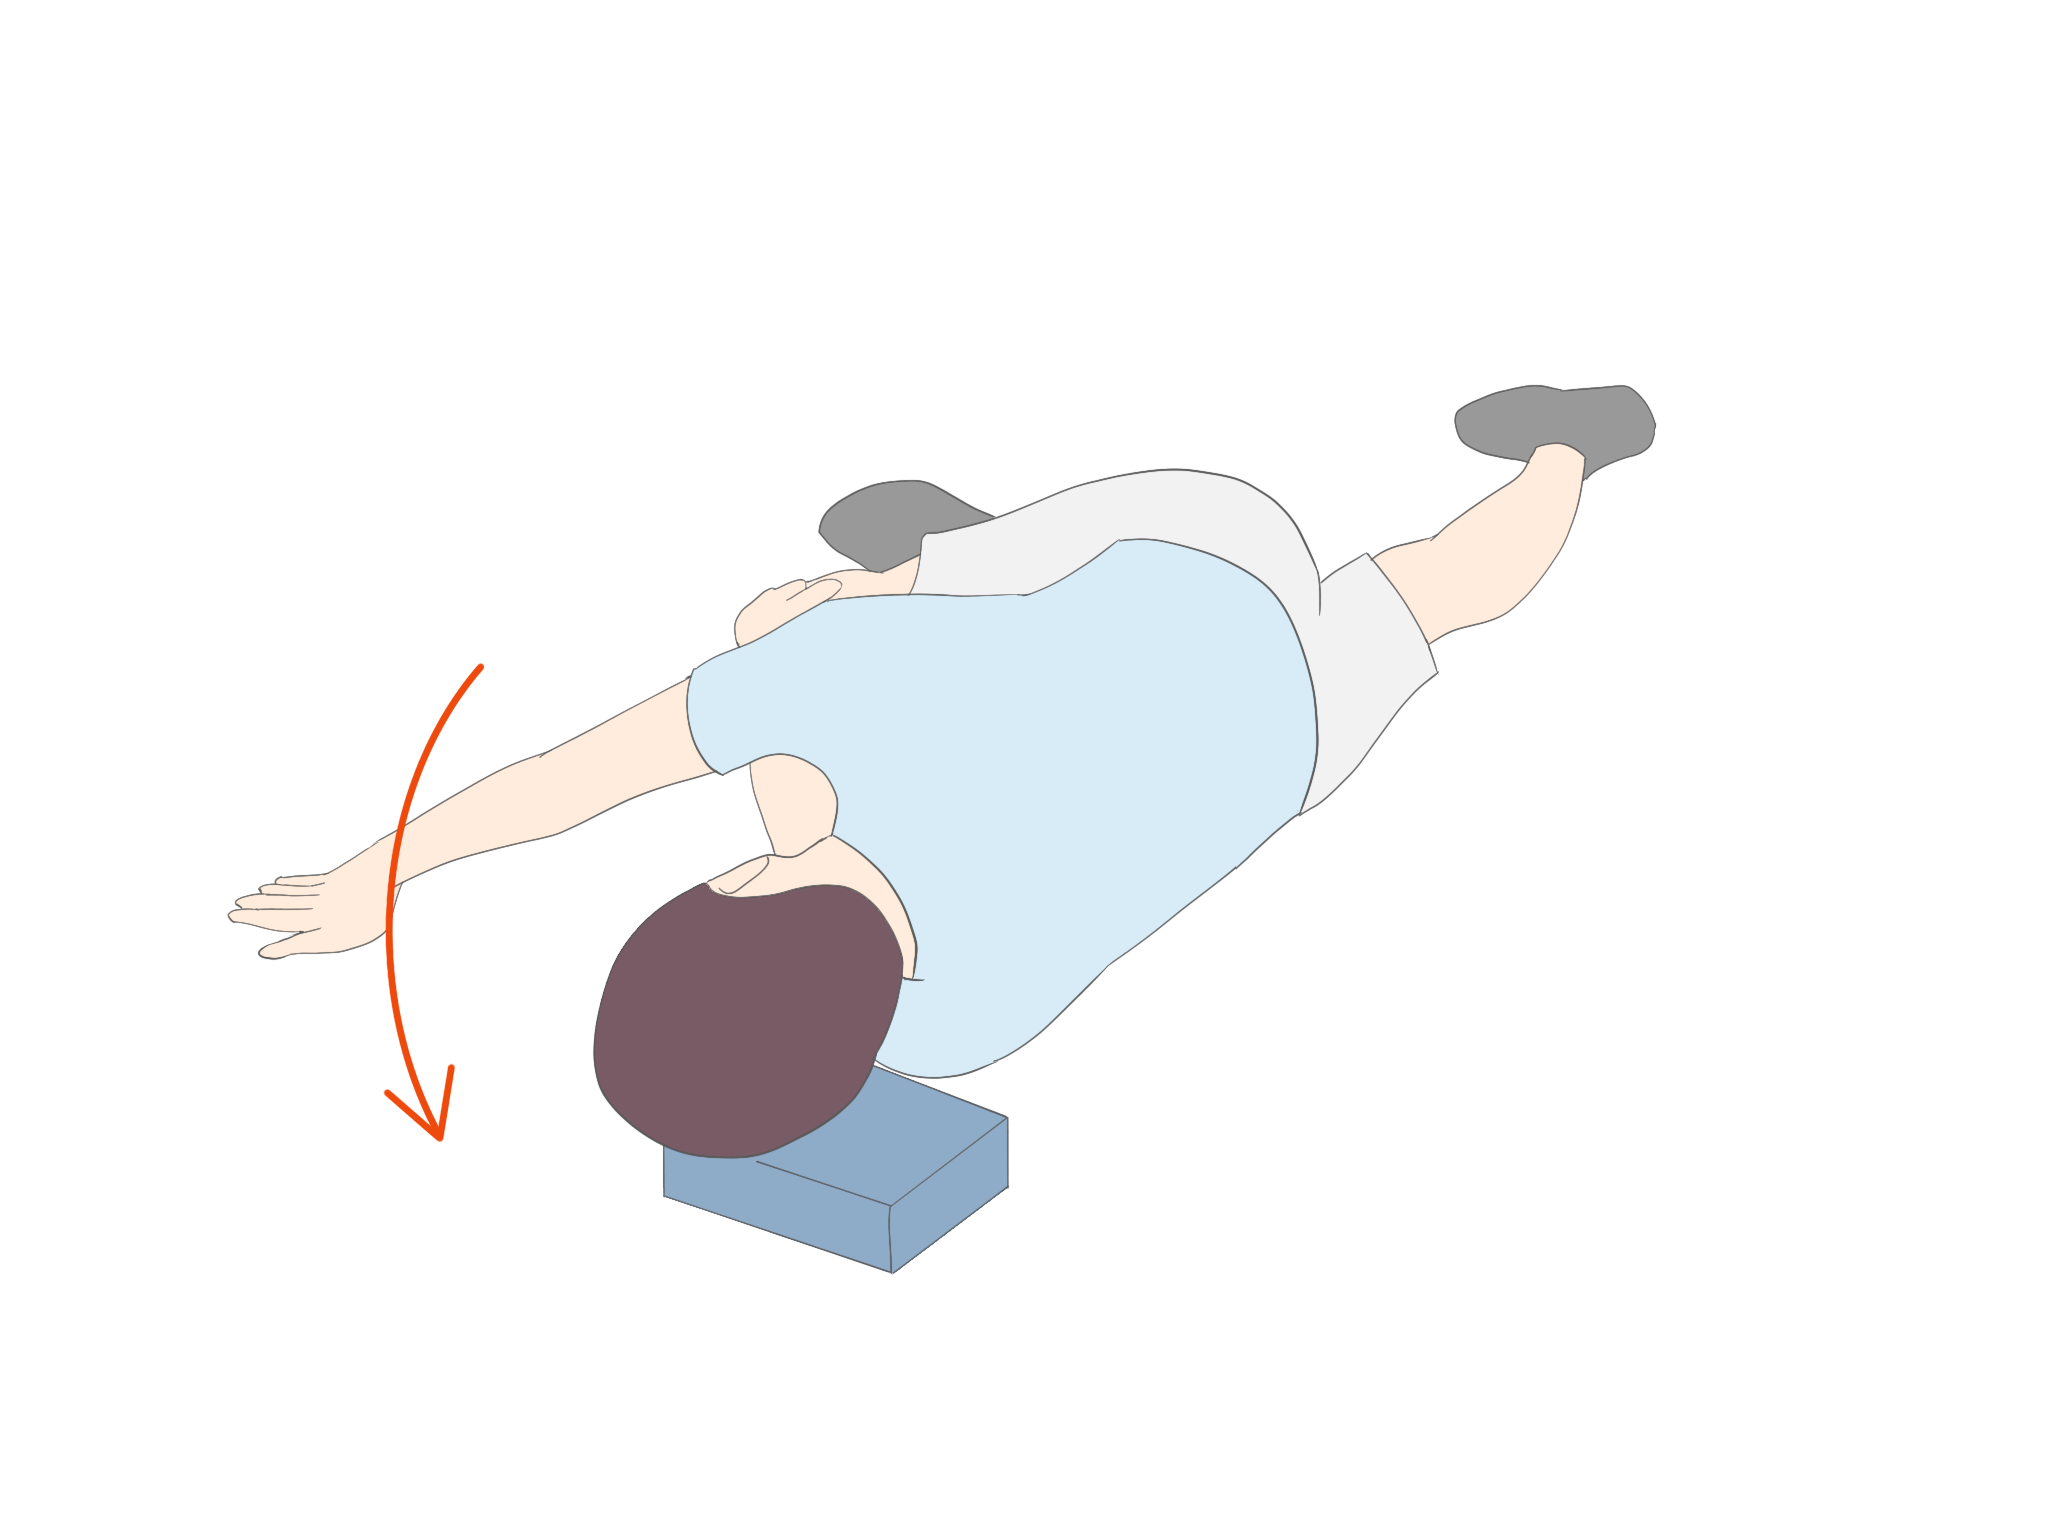 Active stretch trunk rotation arm sweep【金沢市のアルコット接骨院のパーソナルトレーニング】